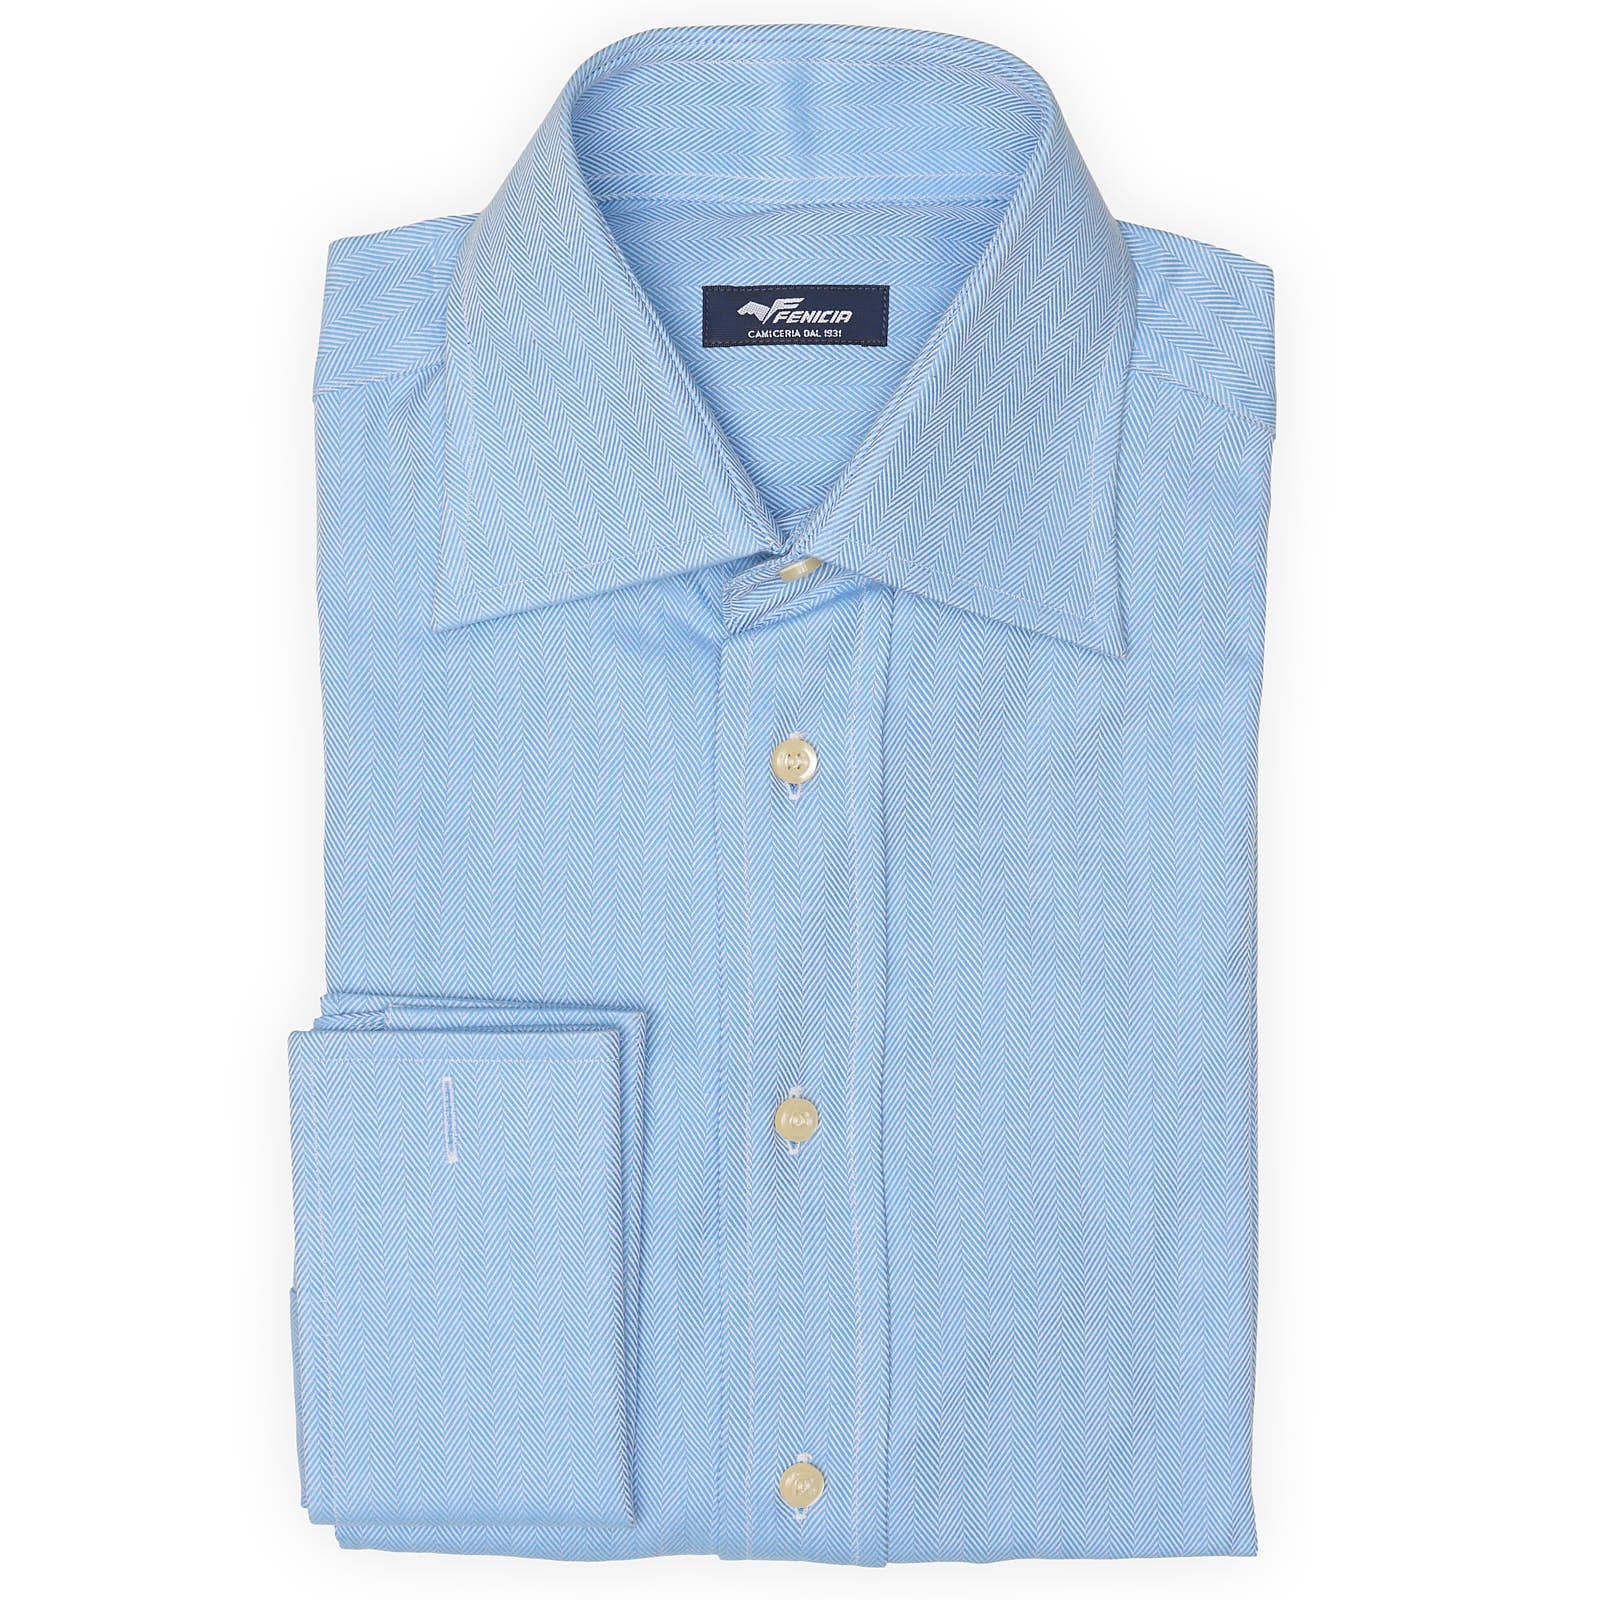 FENICIA Blue Herringbone Cotton French Cuff Dress Shirt EU 38 NEW US 15